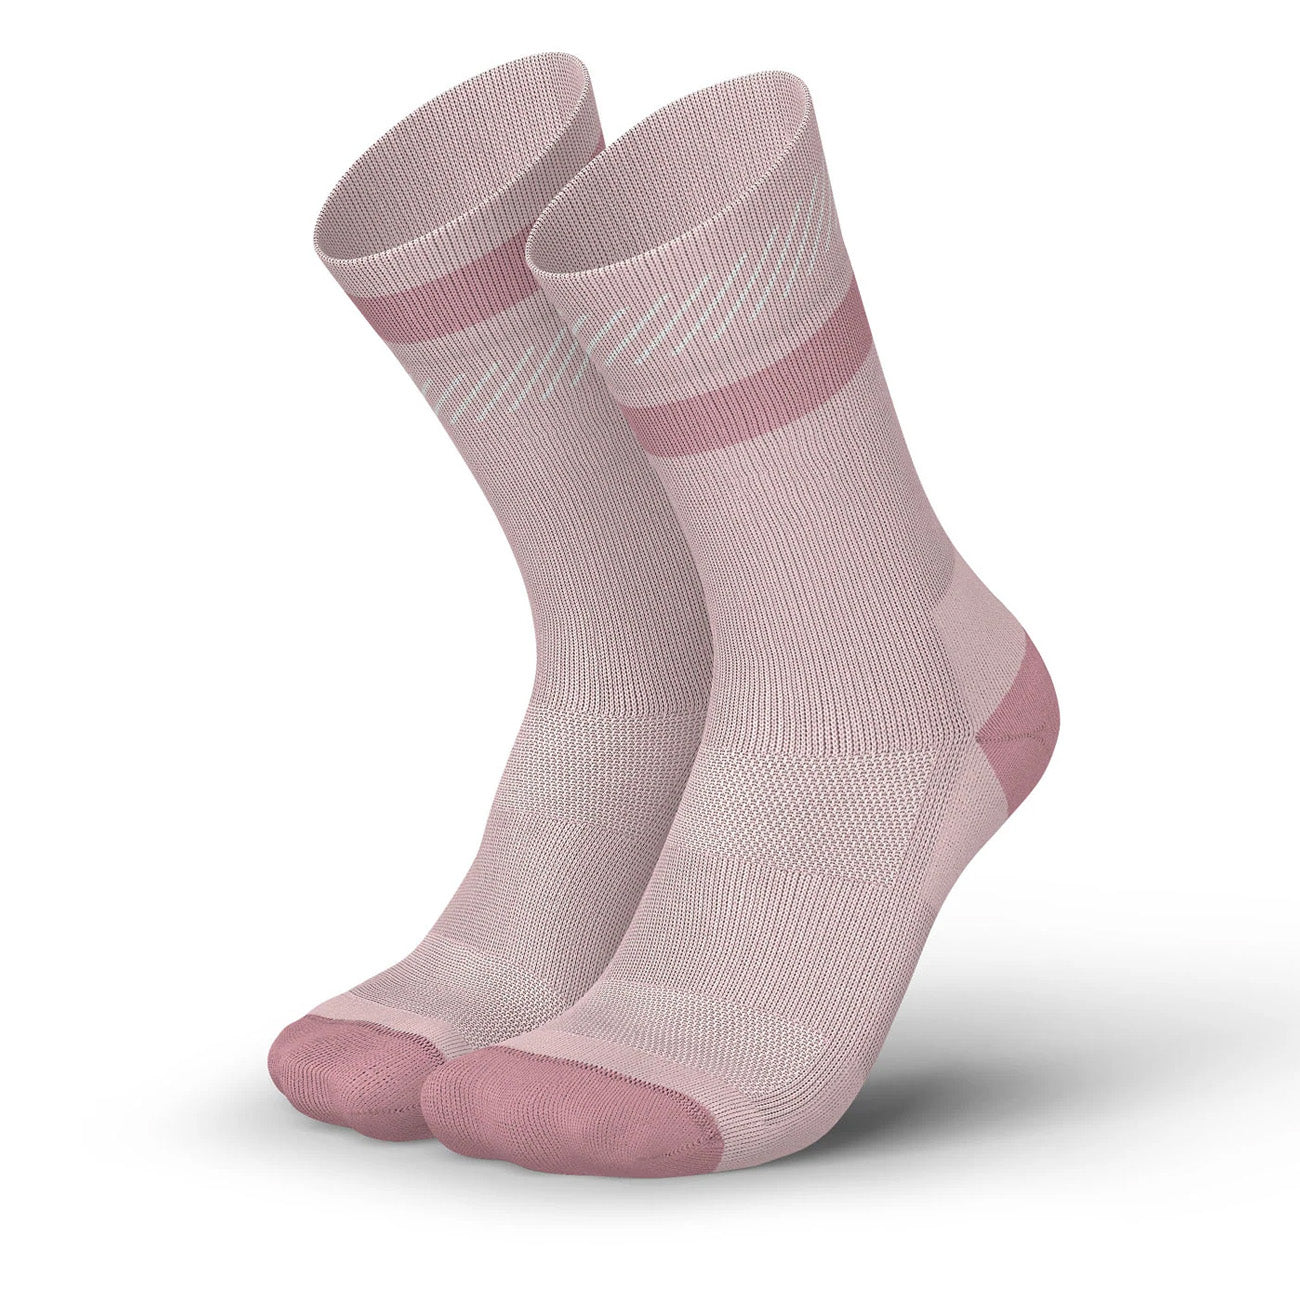 Incylence Renewed 97 Socks Ocean Light Pink